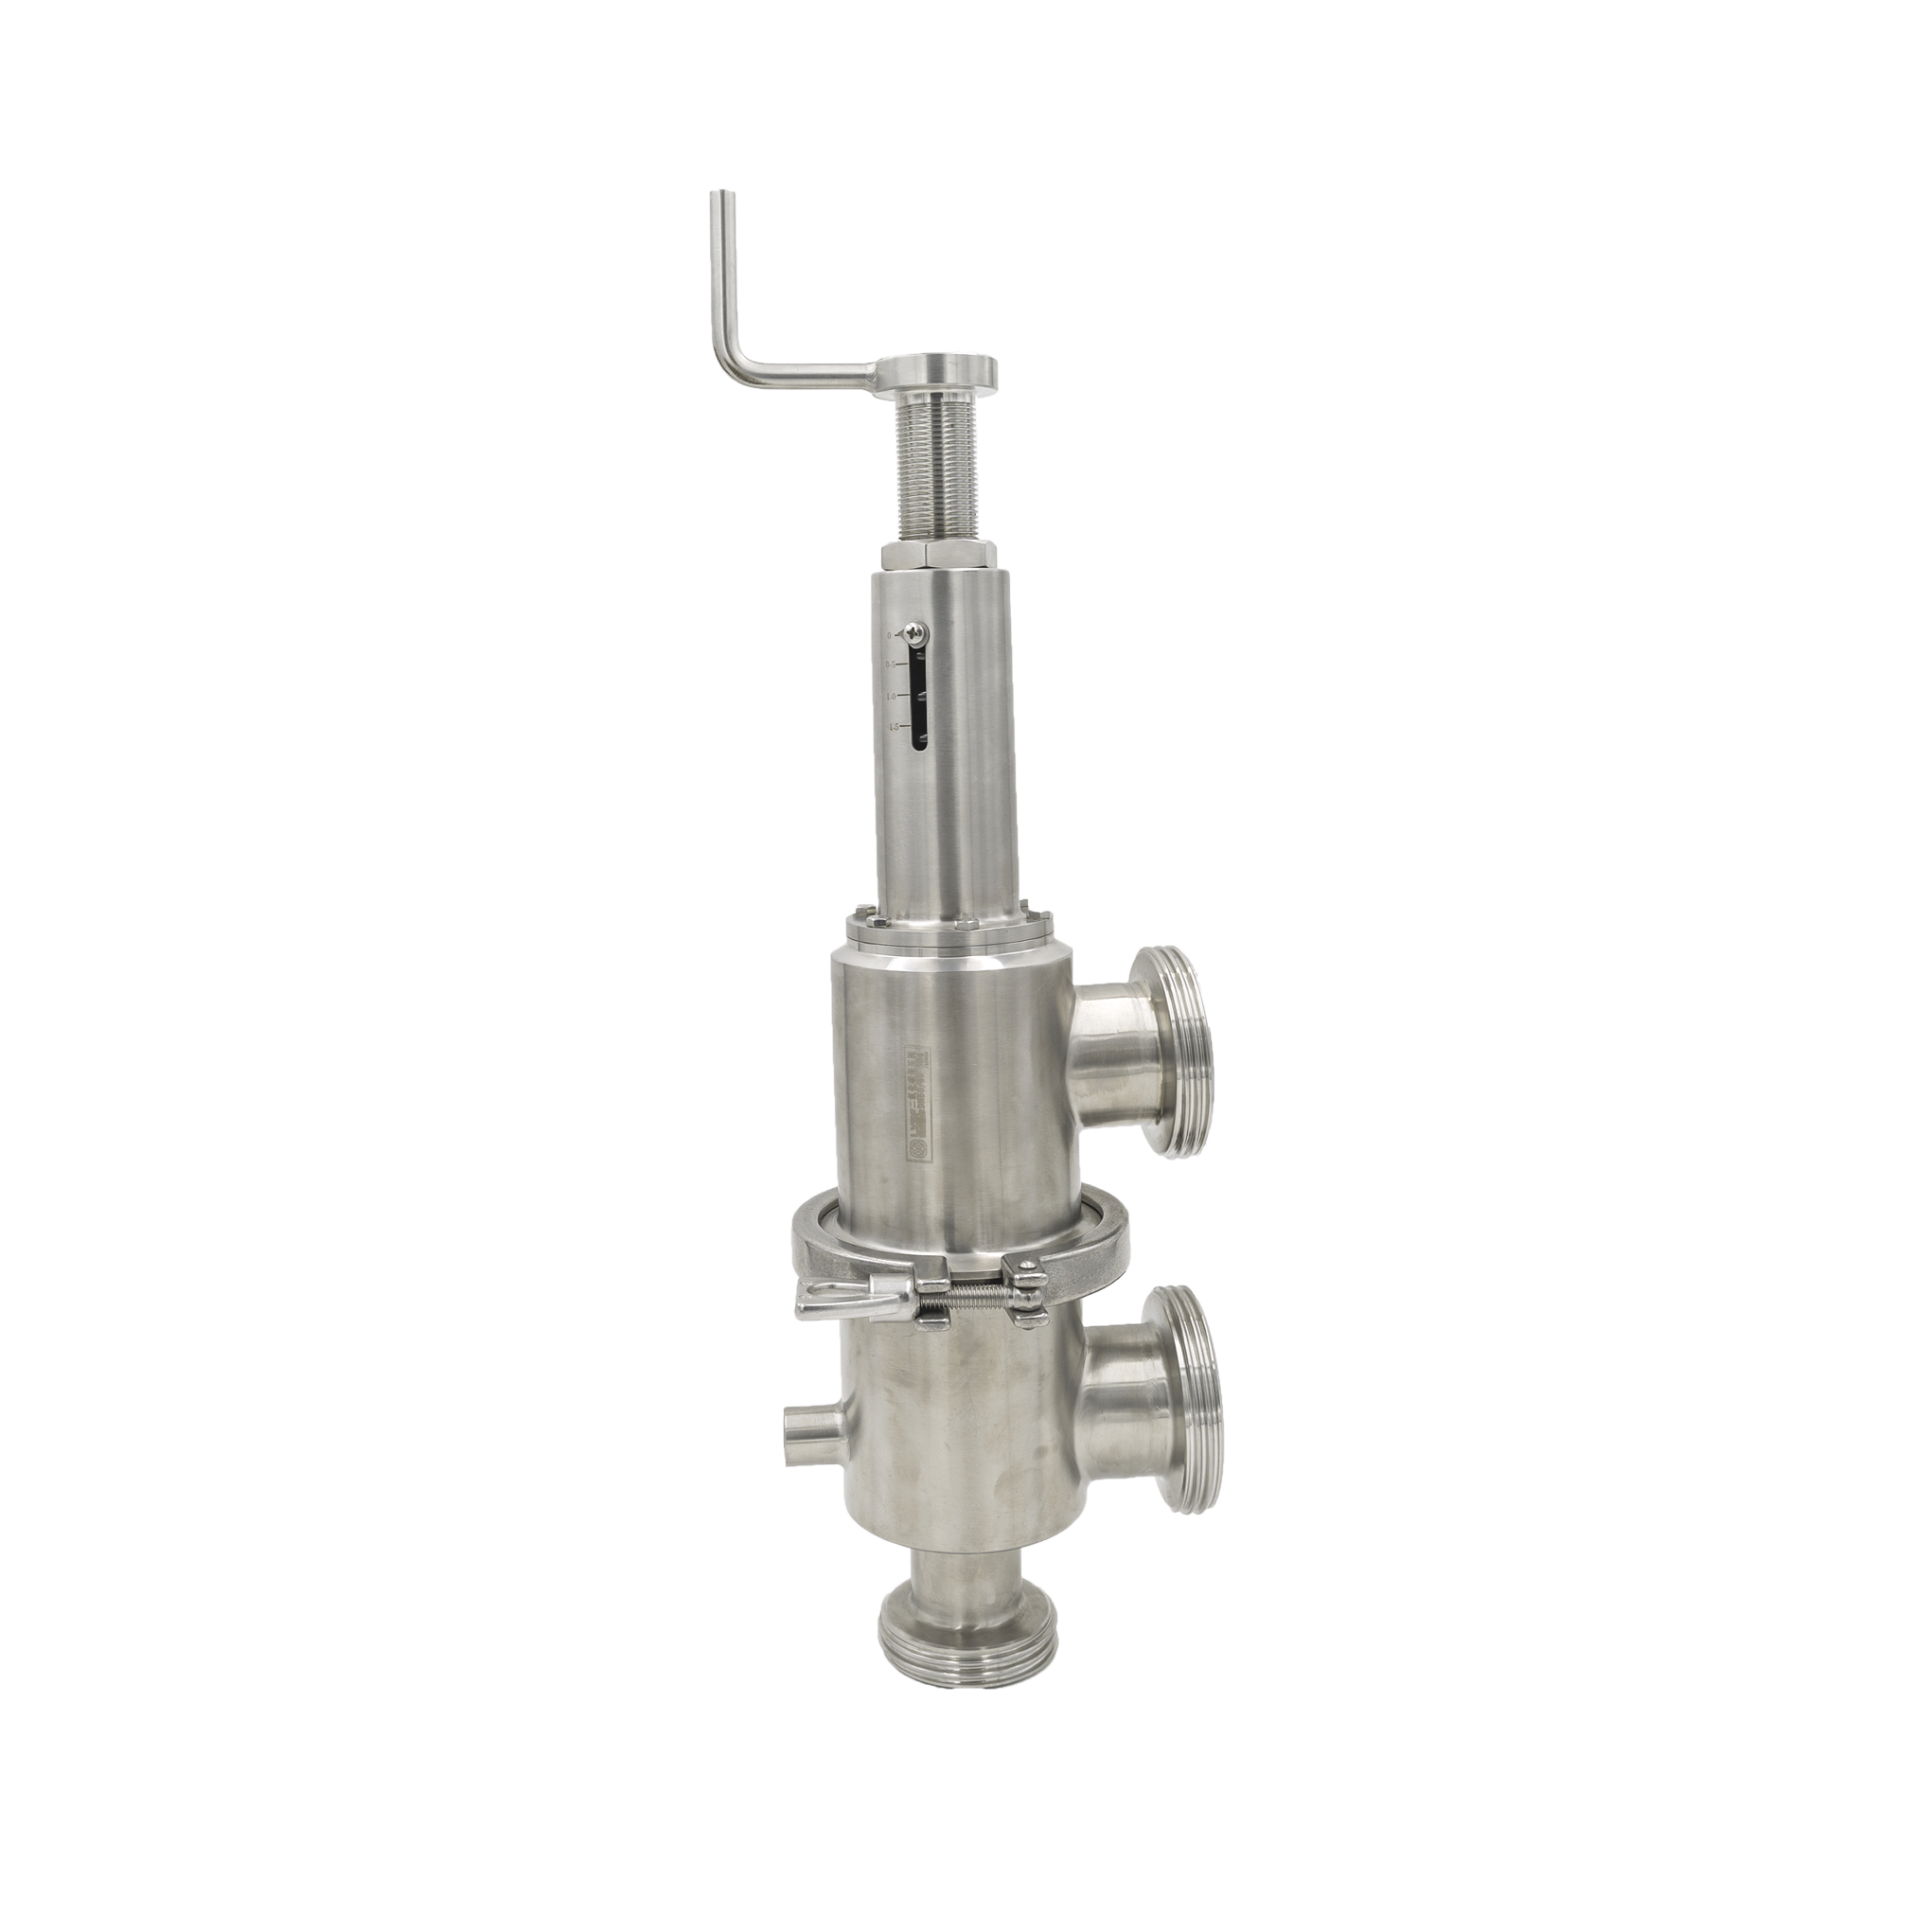 CO2 pressure holding valve